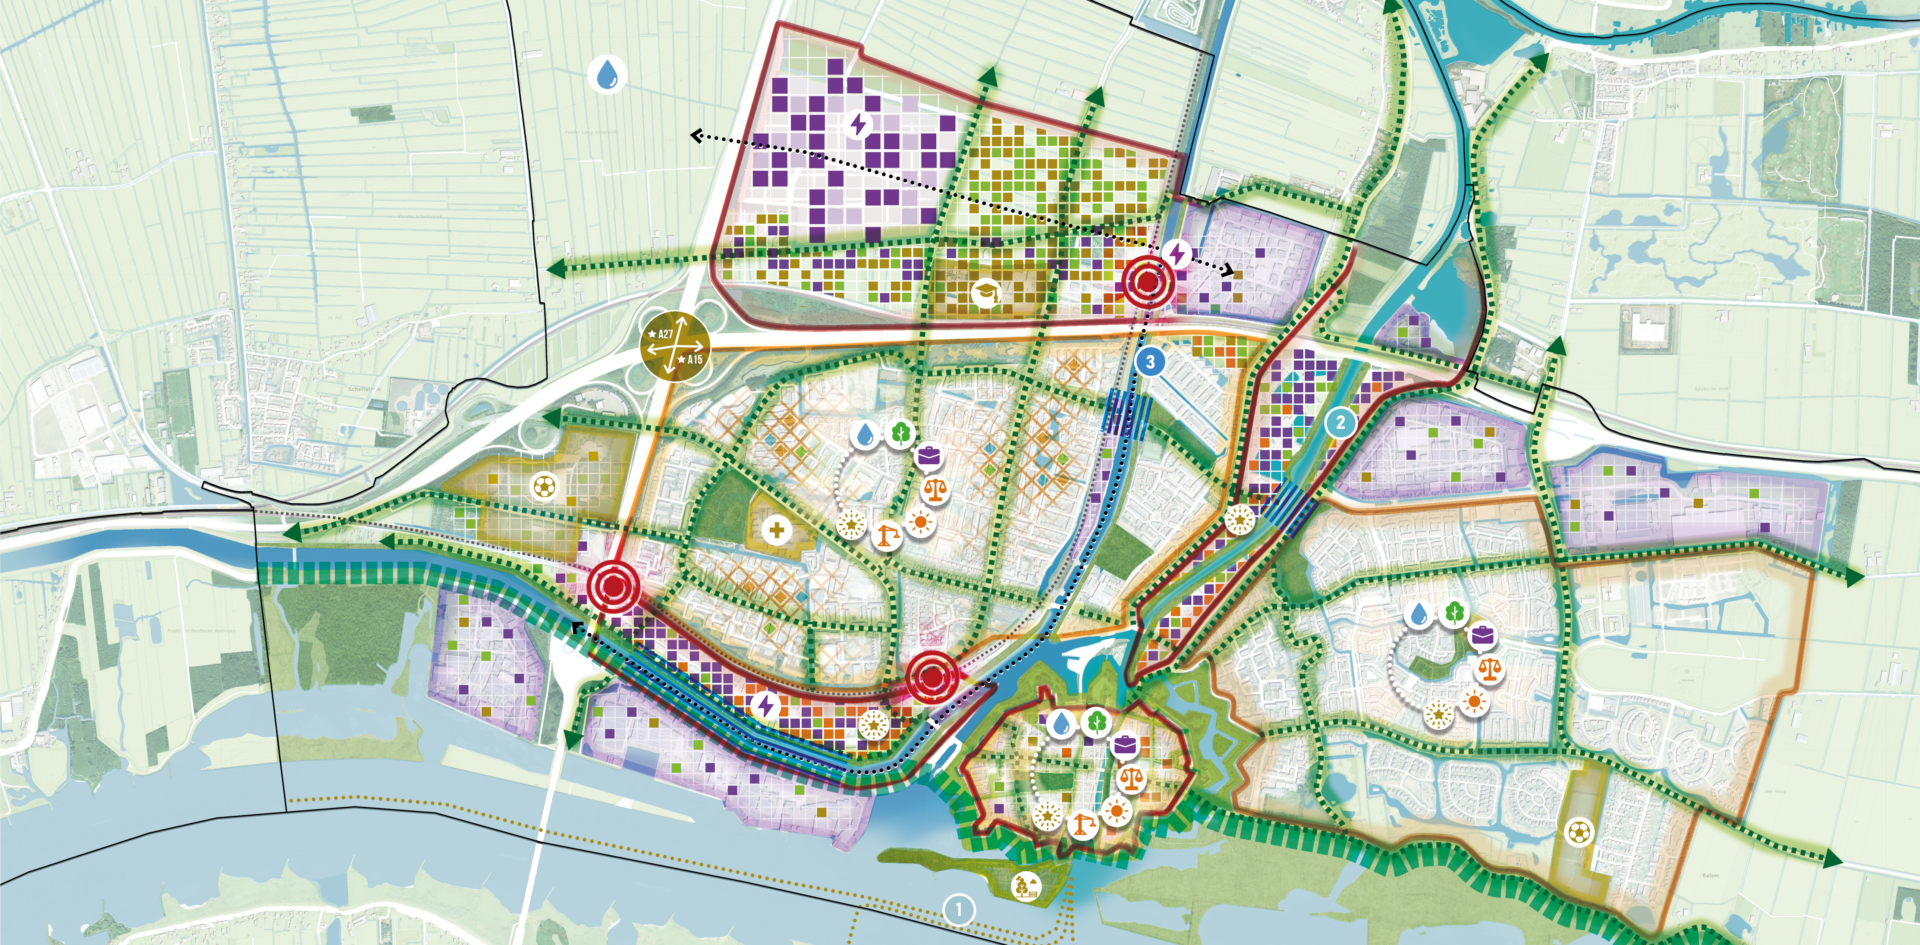 Omgevingsvisie Gorinchem 2050 “Stad in Balans”